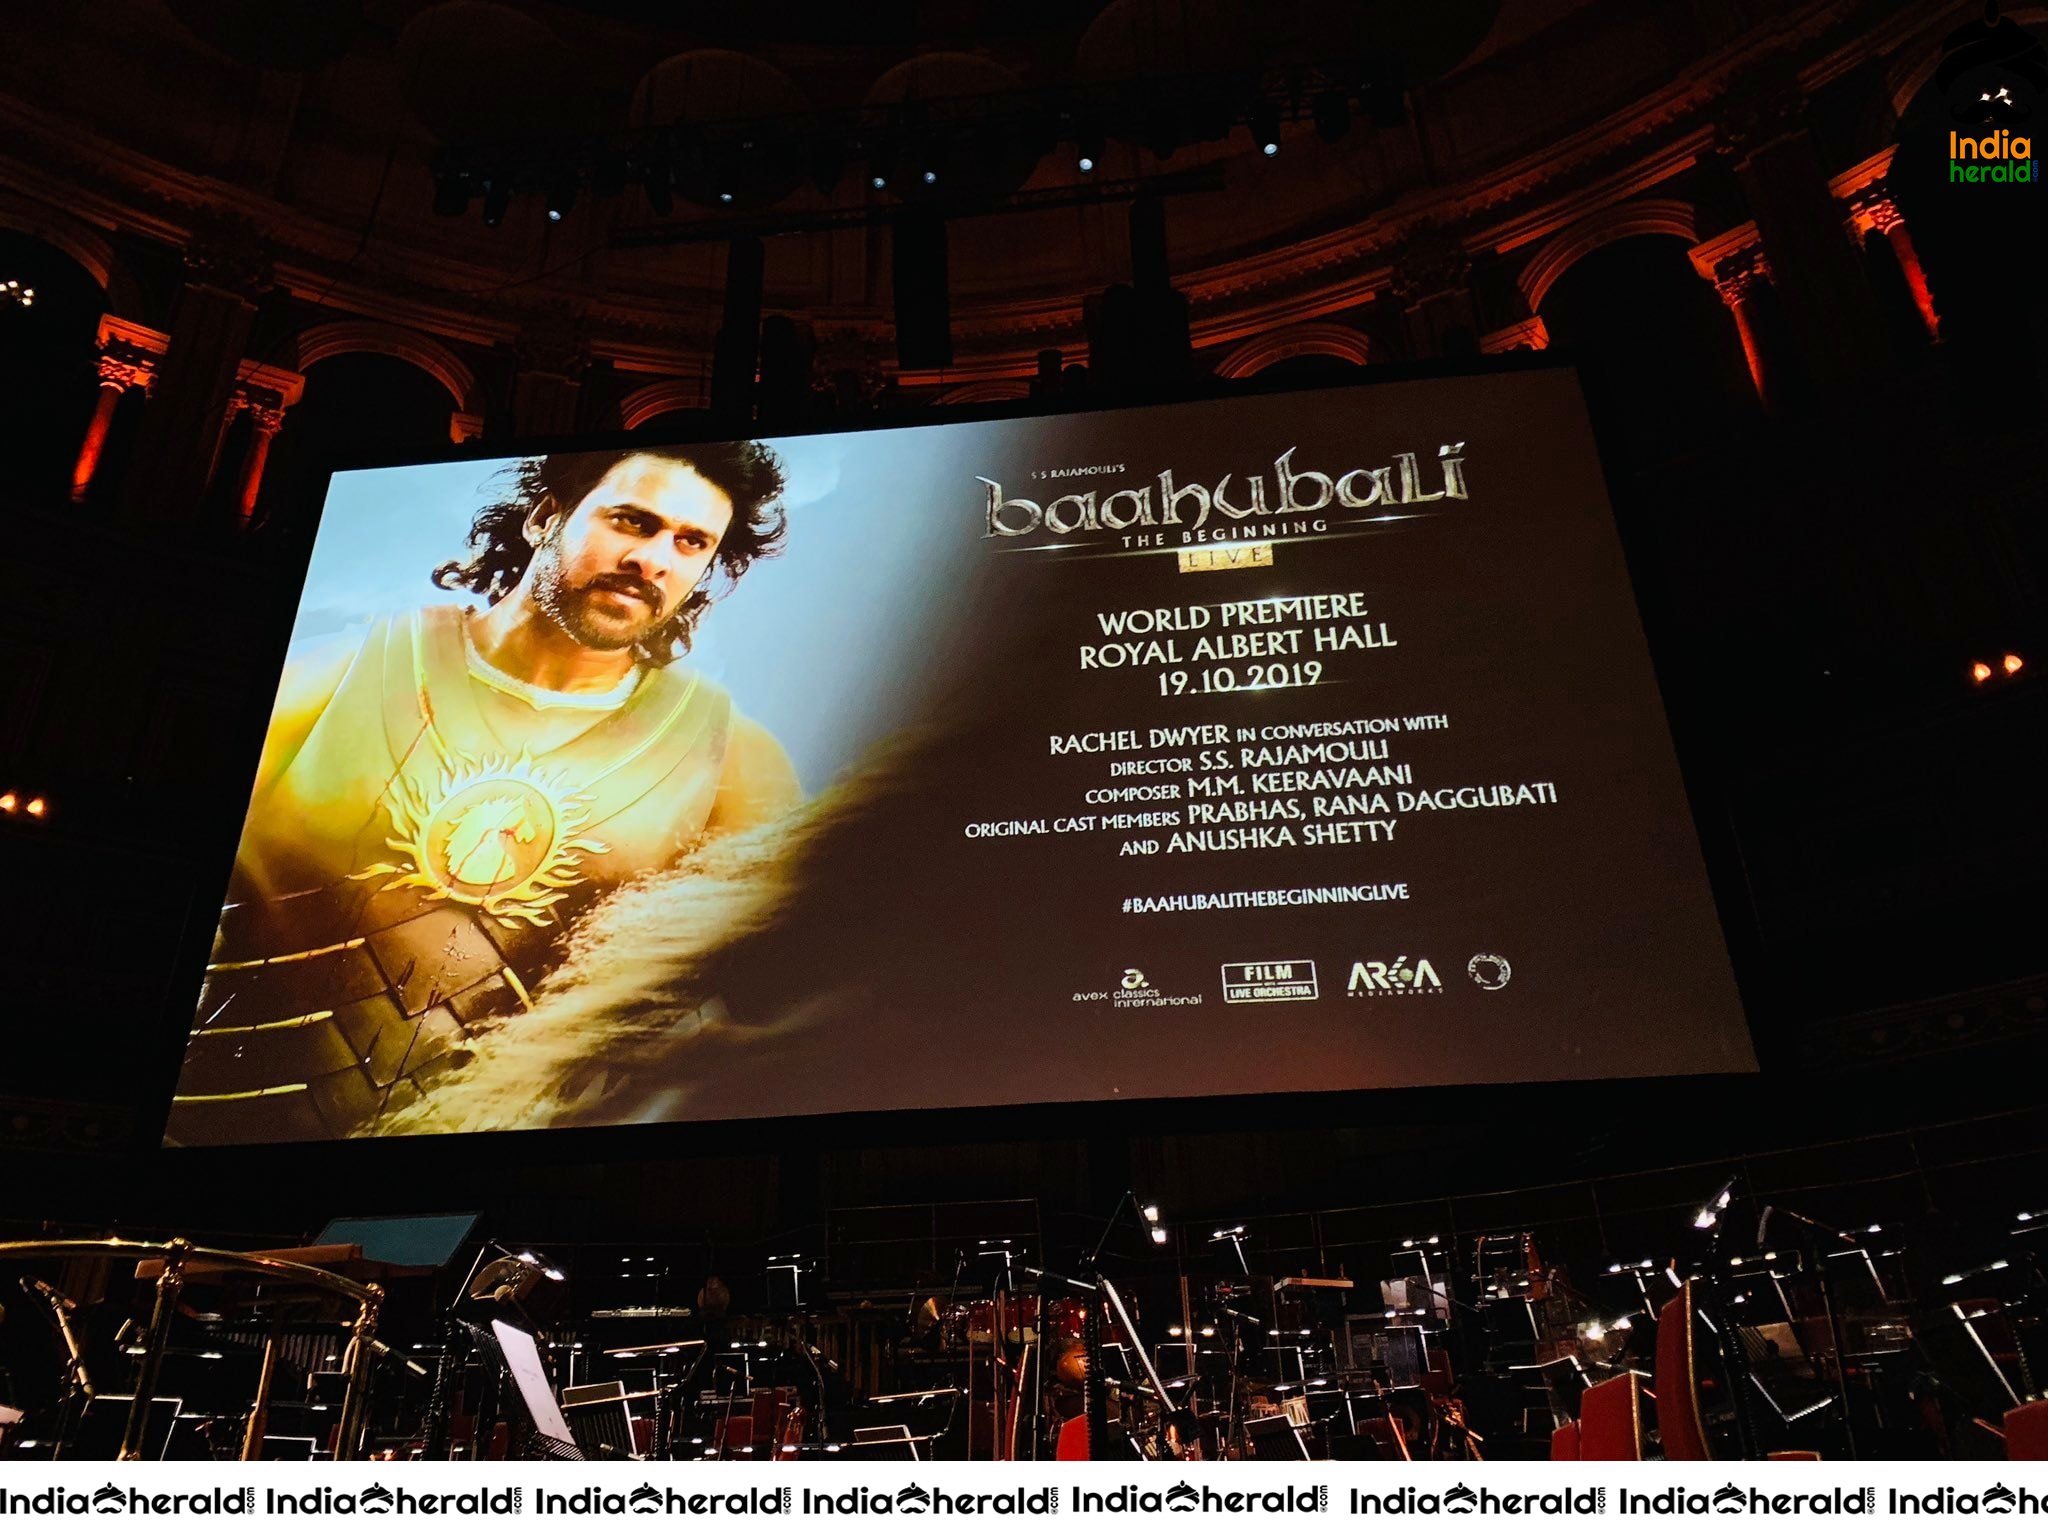 Team Baahubali at the Screening of Baahubali The Beginning at Royal Albert Hall with live orchestration Set 3